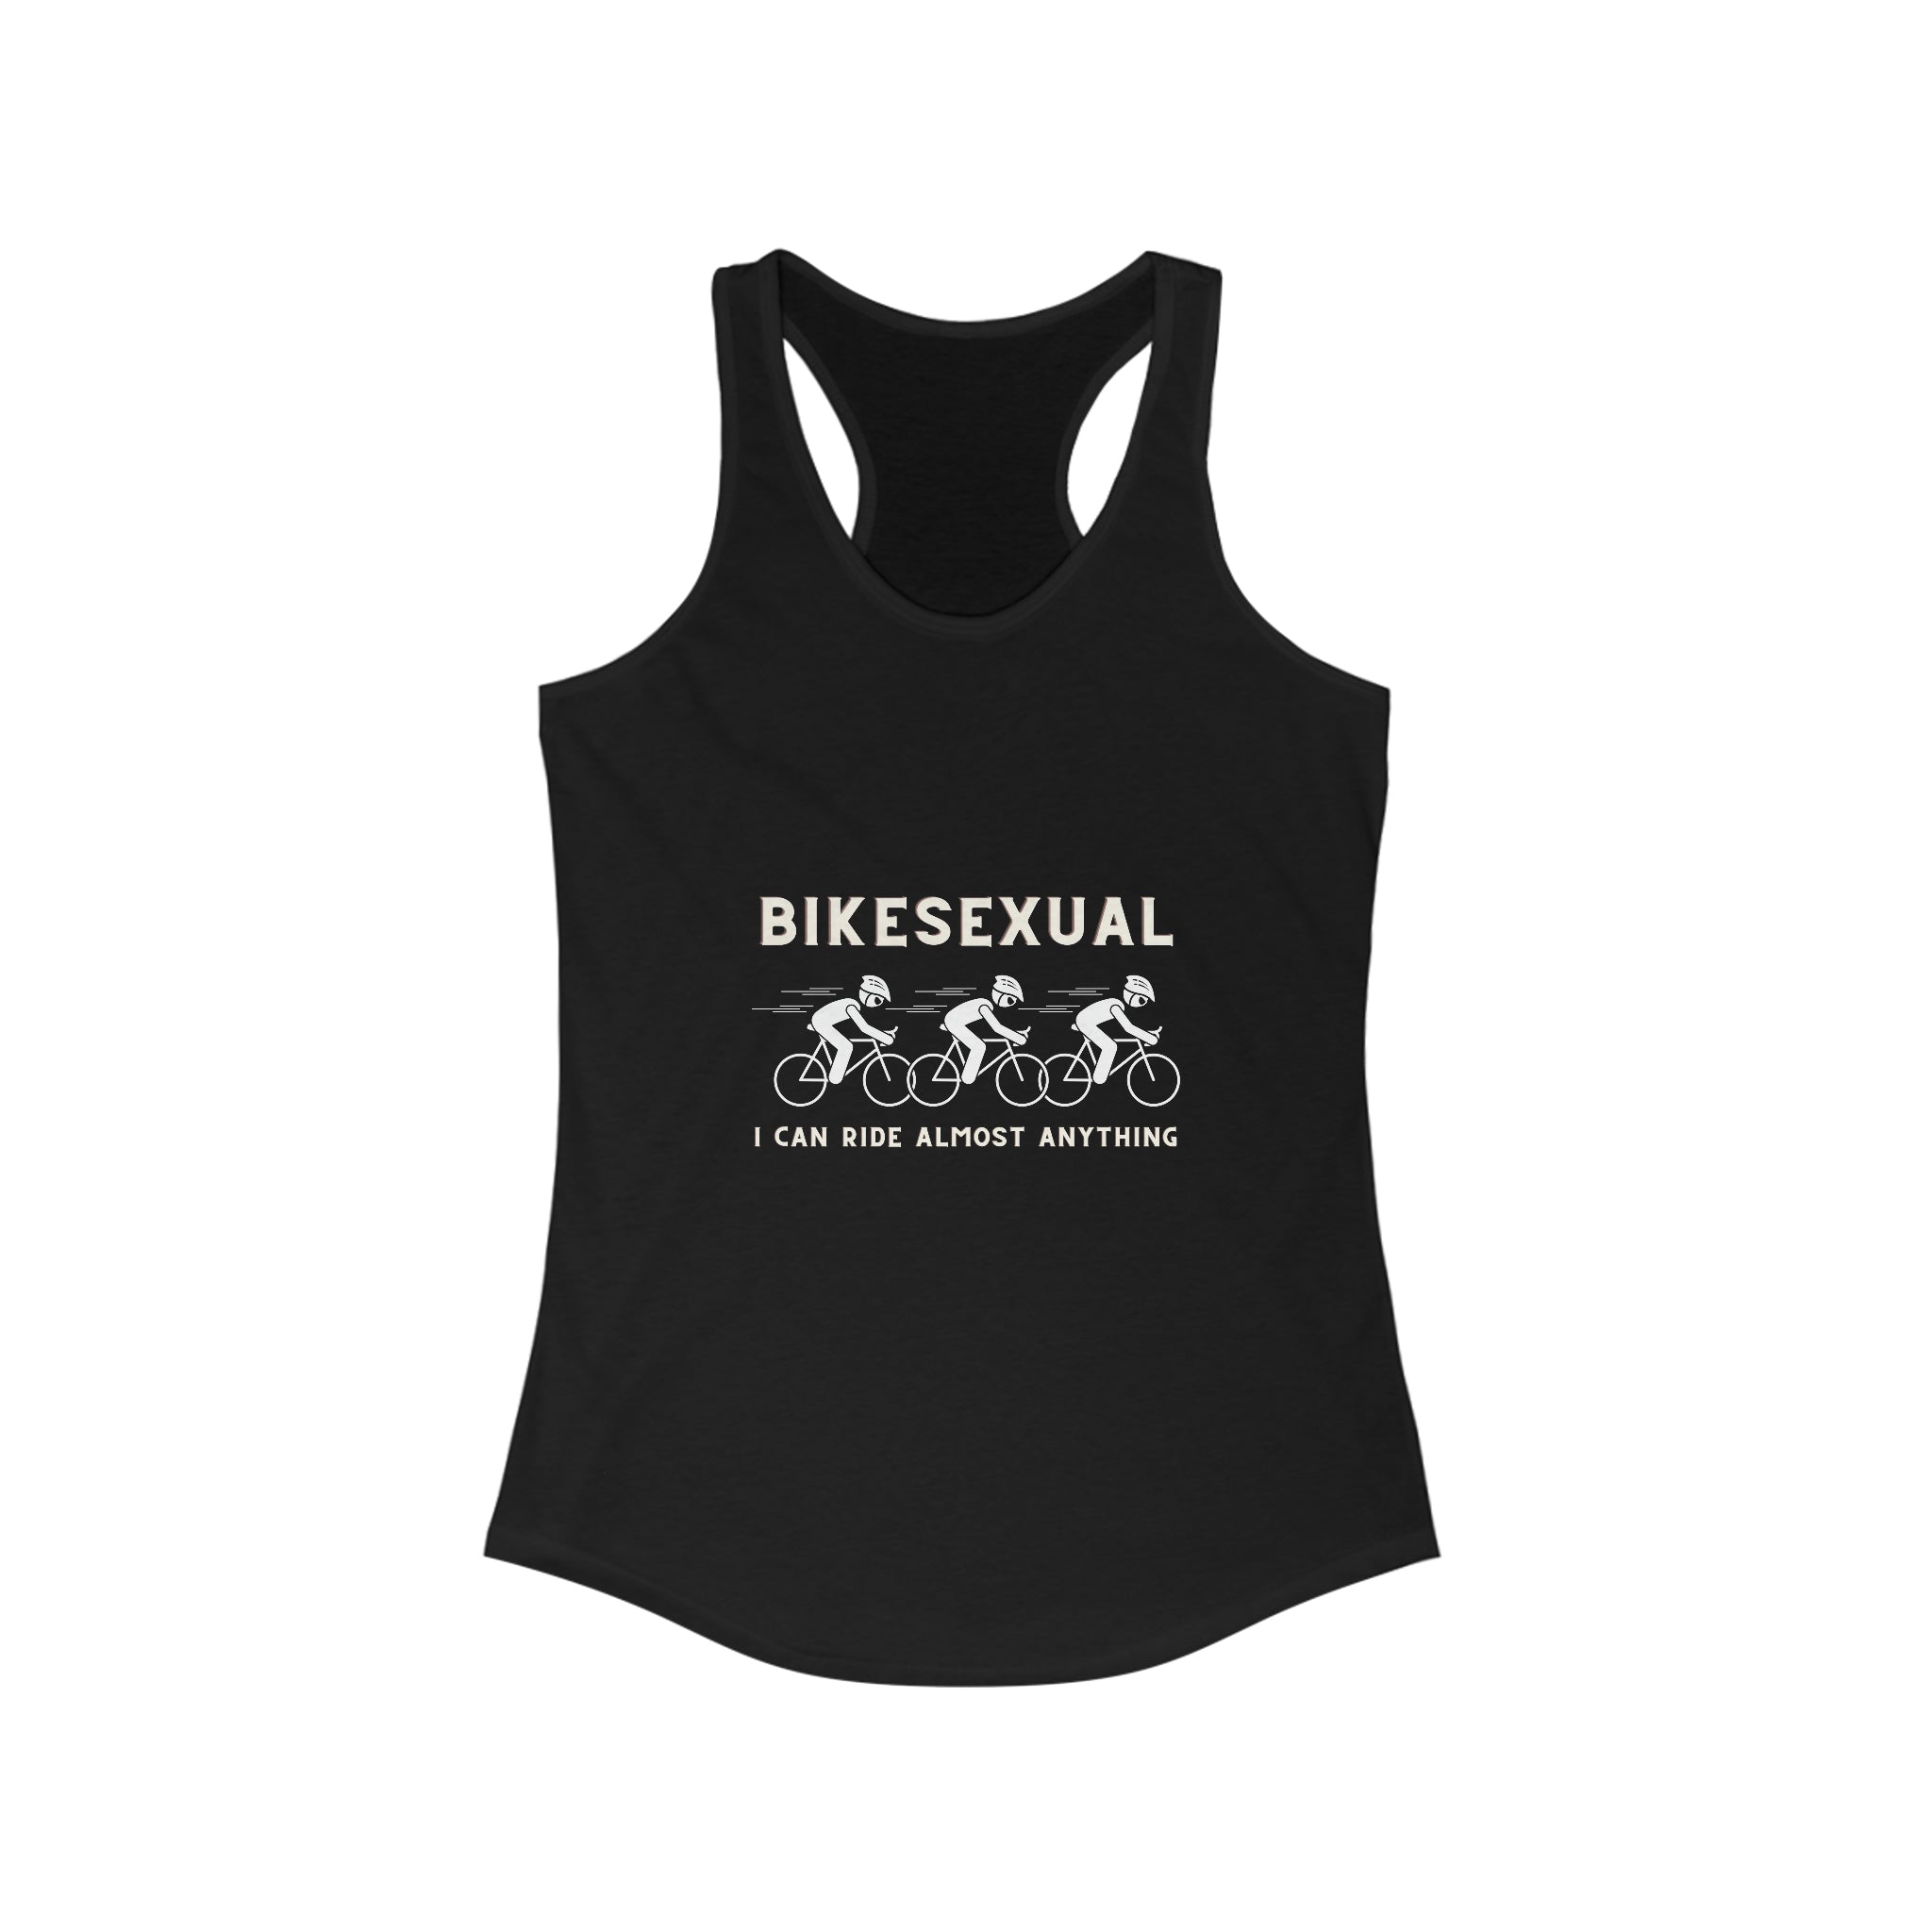 Women's Ideal Racerback Tank BIKESEXUAL - Versatile Cyclist's Pride Tee for Triathletes